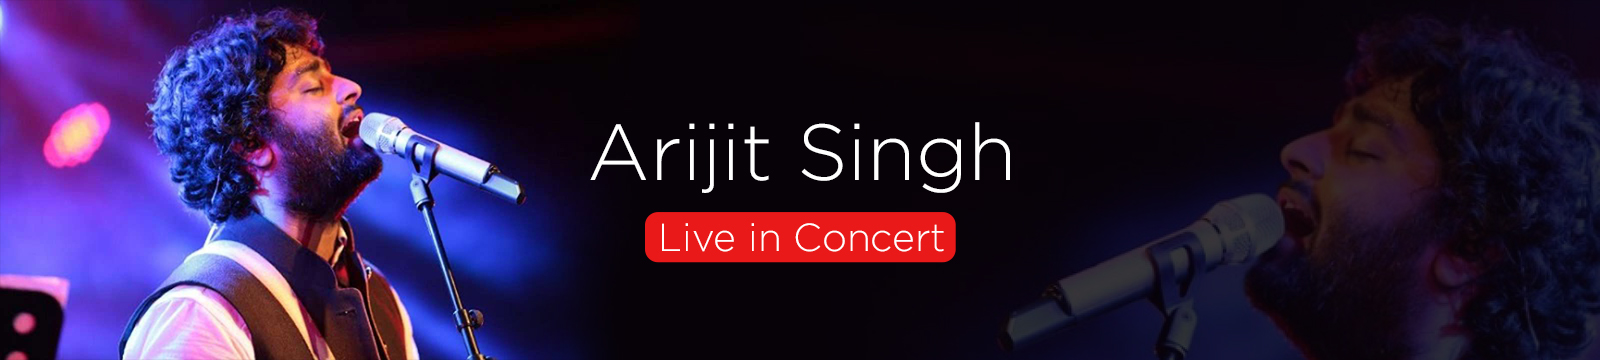 Arijit Singh Live in Concert - Blog